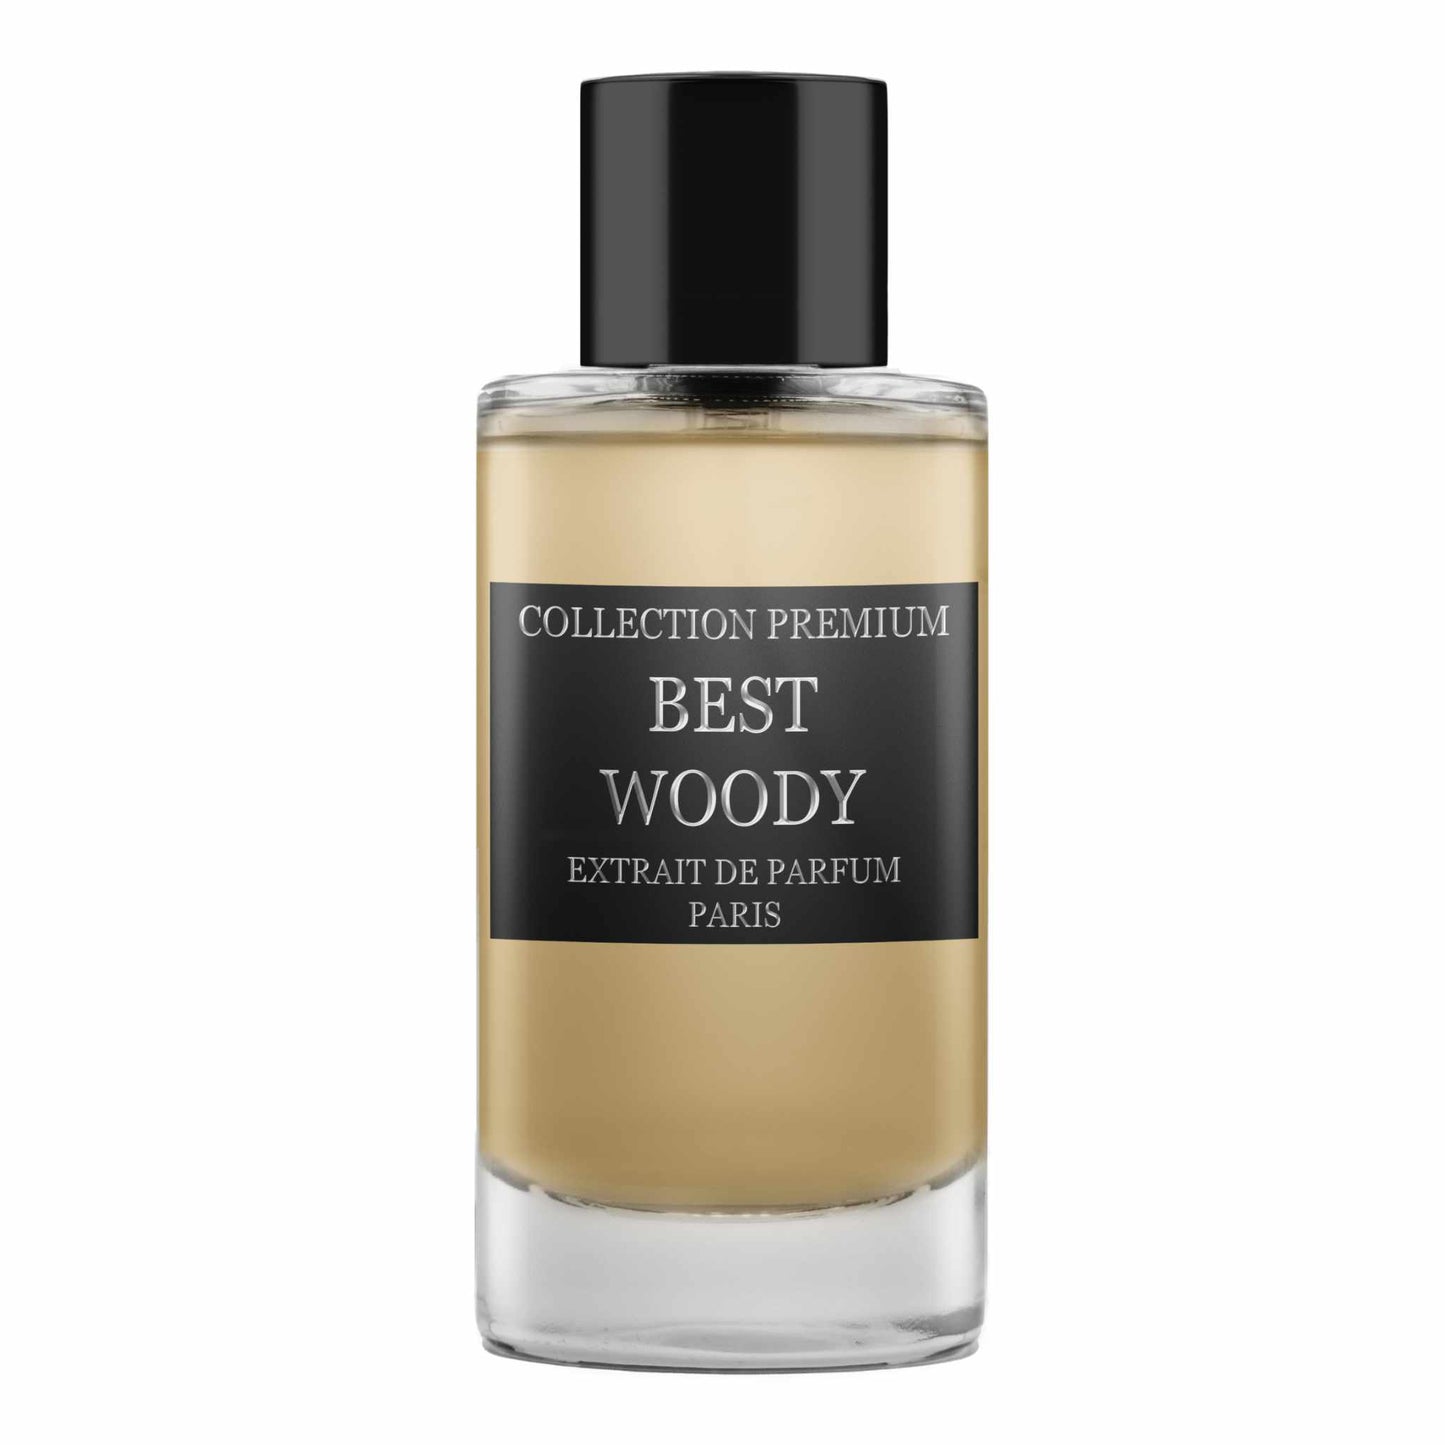 Collection Premium Best Woody Extrait de Parfum 50 ml